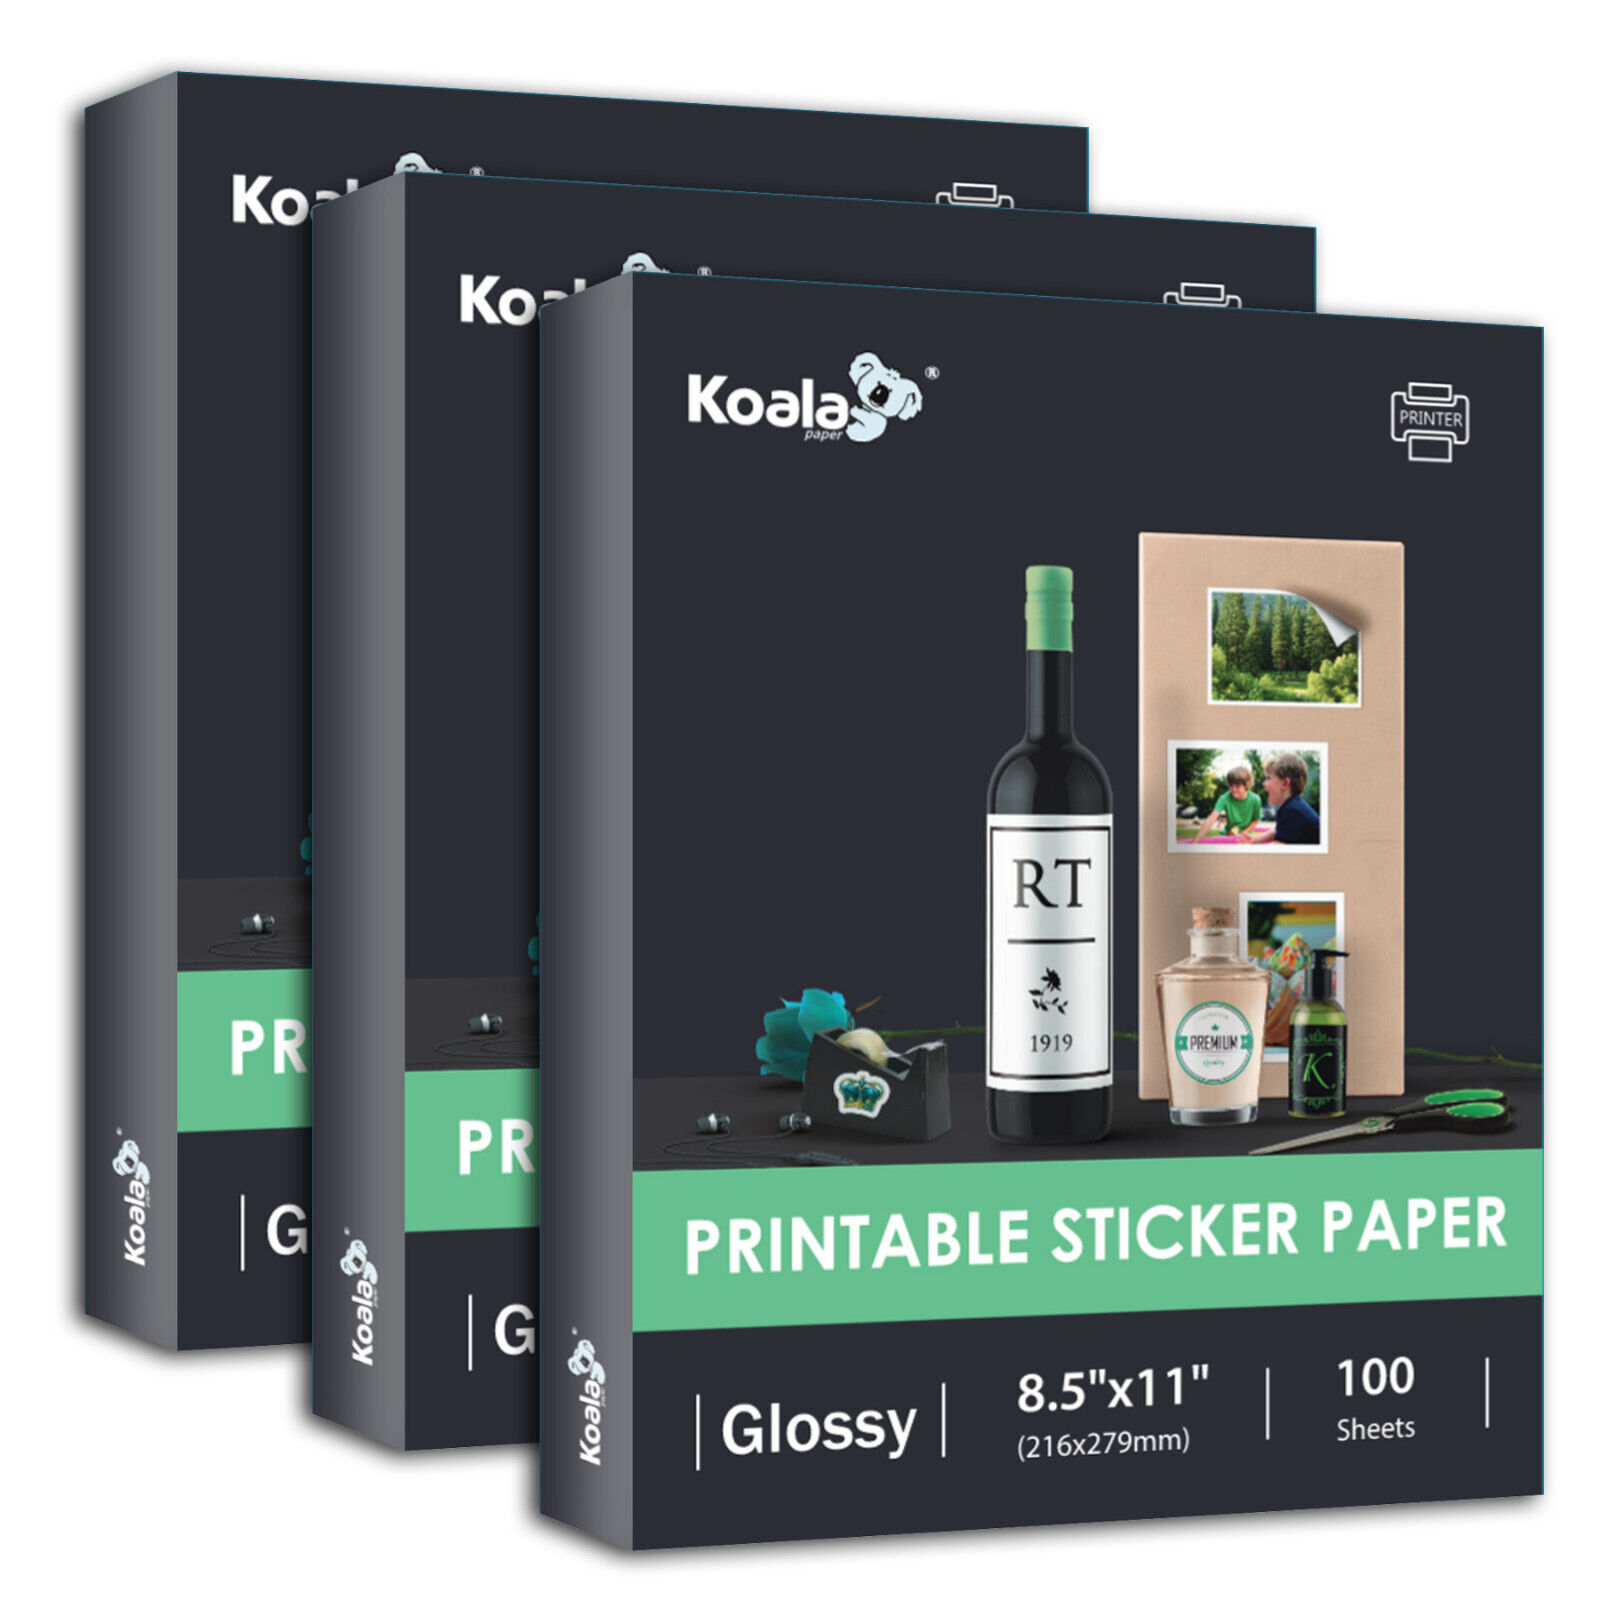 300 Sheets Koala Glossy Sticker Paper 8.5x11 for Inkjet & Laser Printers Label